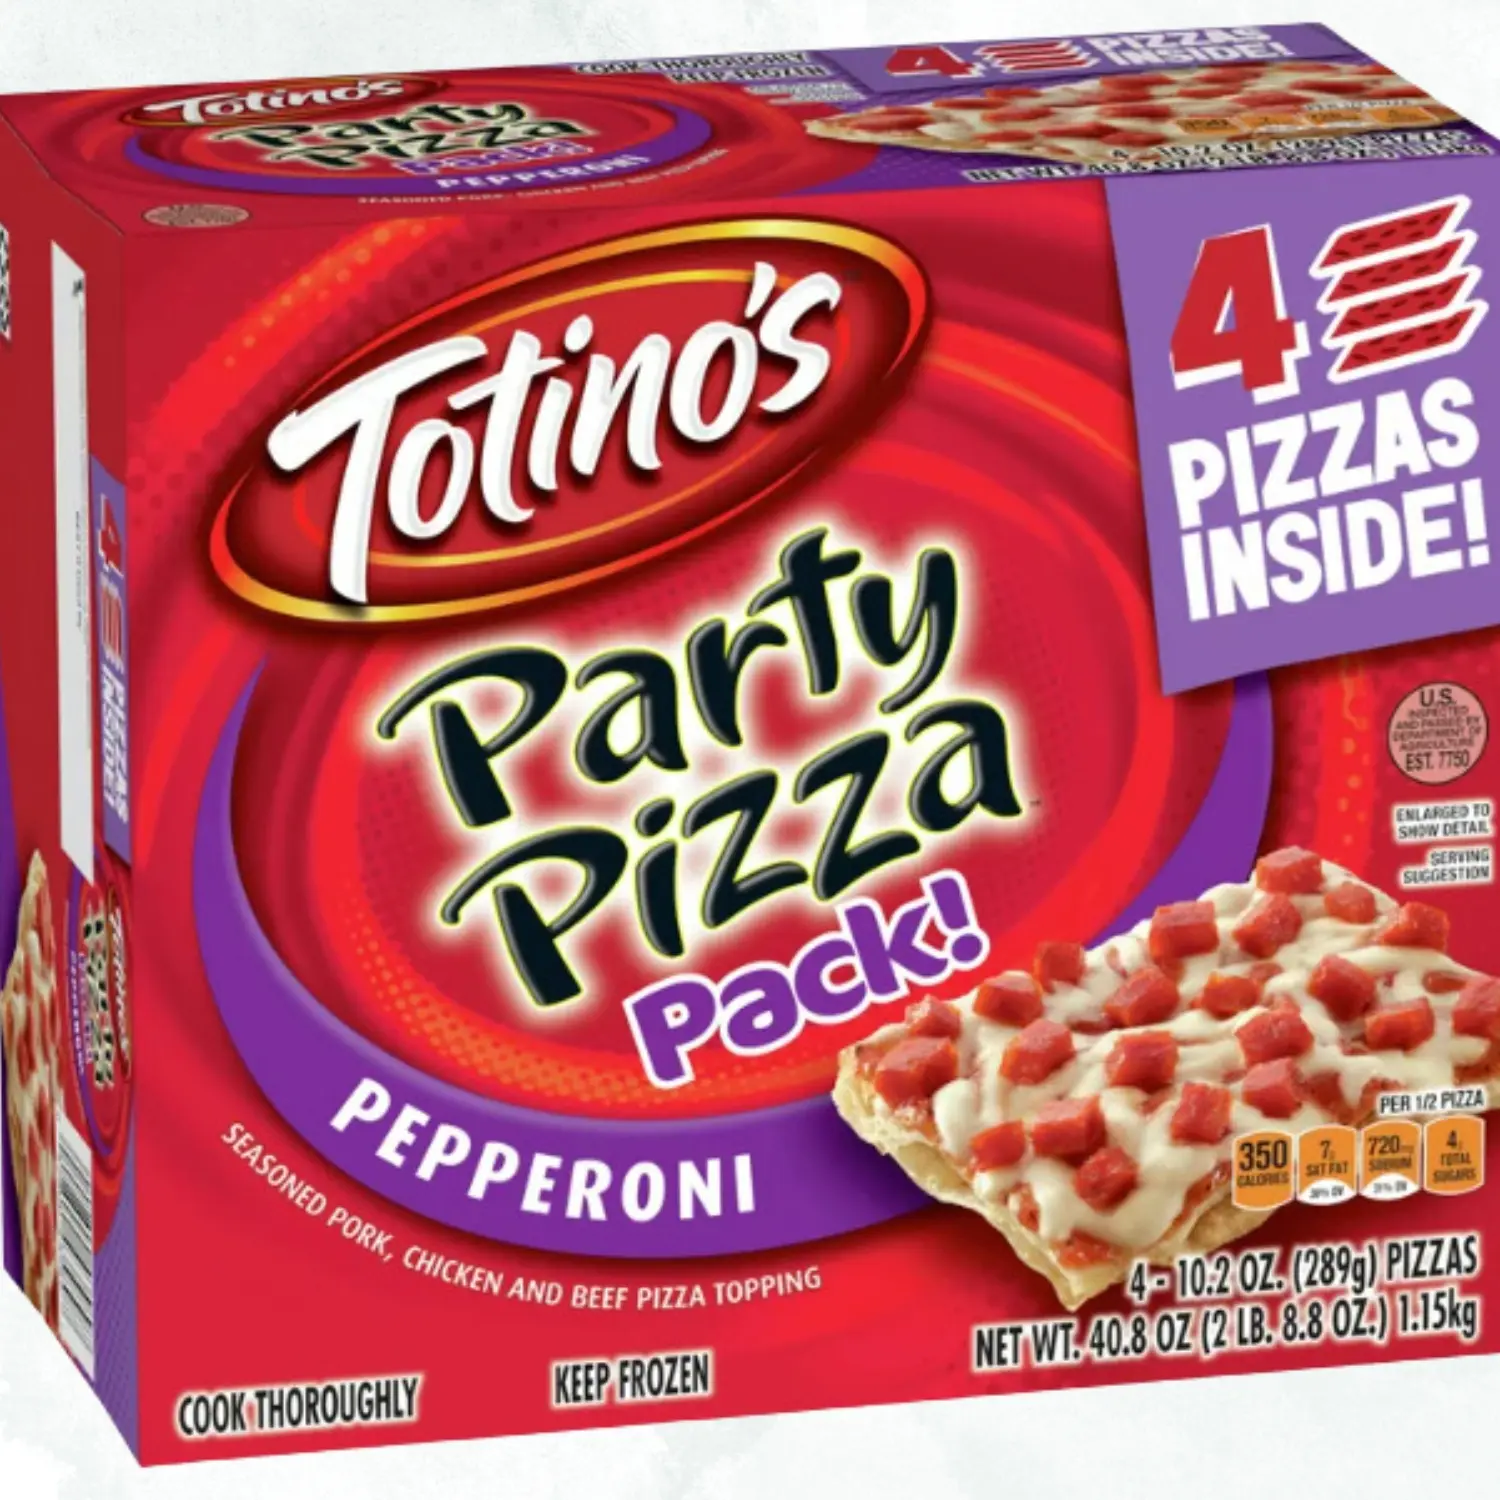 Tips to make perfect Totino’s Pizza